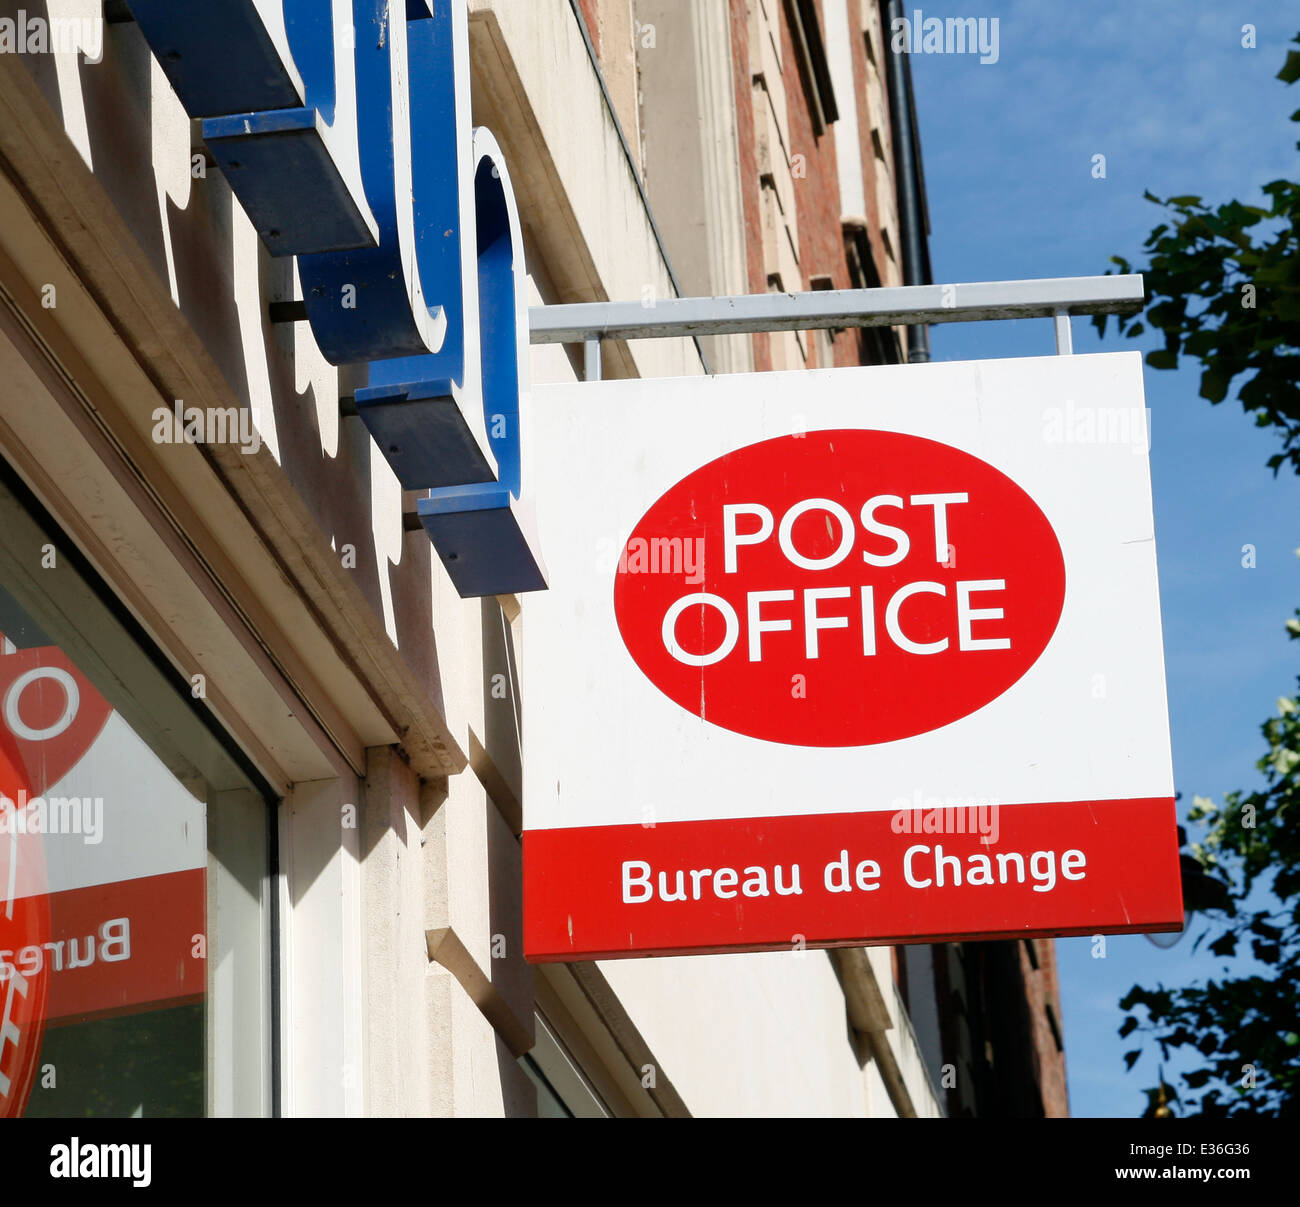 Post Office and Bureau de Change logo Worcester Worcestershire England UK Stock Photo